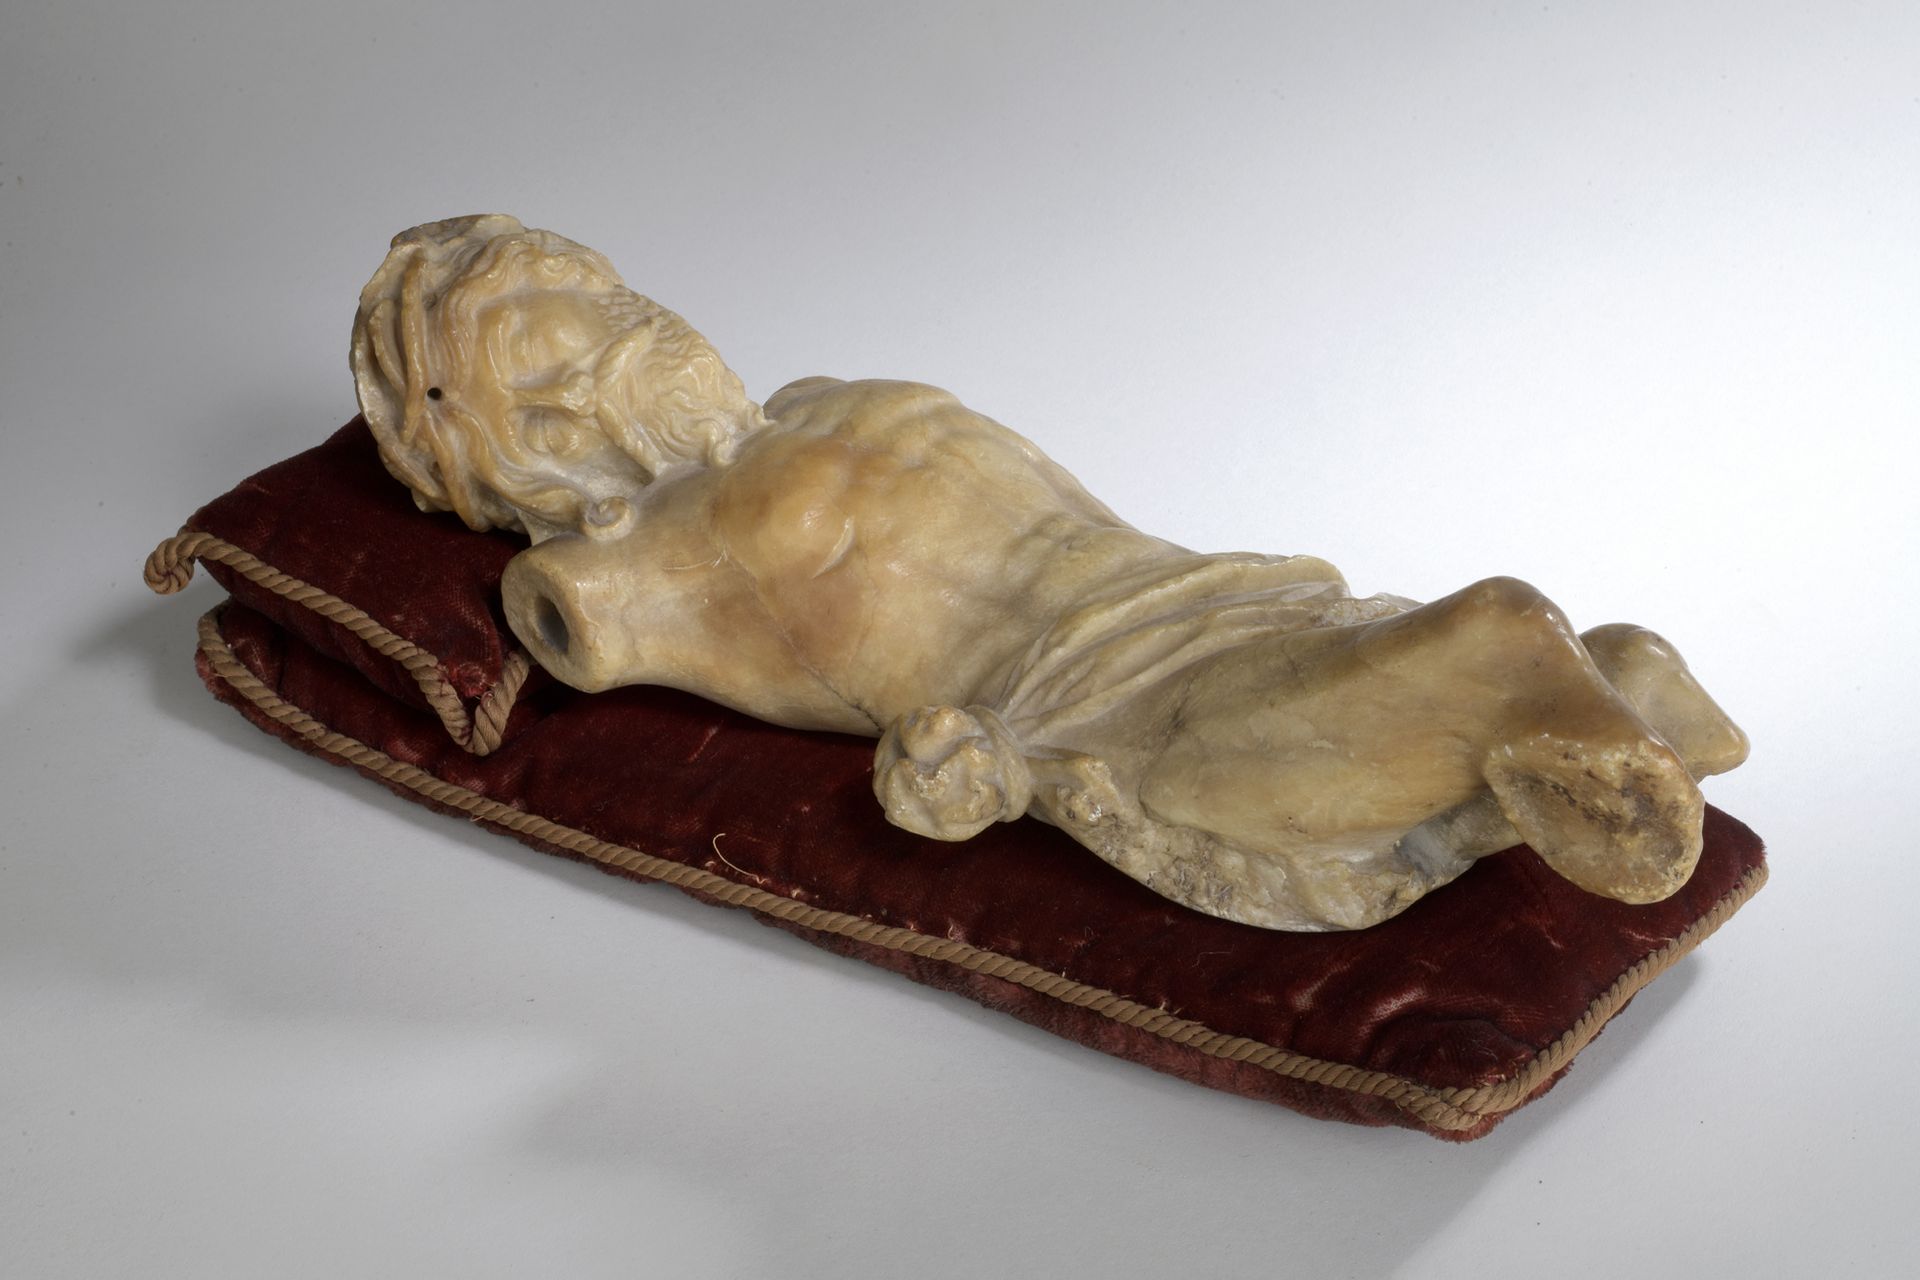 Null 荷兰南部或德国，16世纪

受难的基督

雕刻的雪花石膏像

H.37.5厘米，站在一个深红色的天鹅绒垫子上

残缺不全的状态，胳膊和腿都不见了